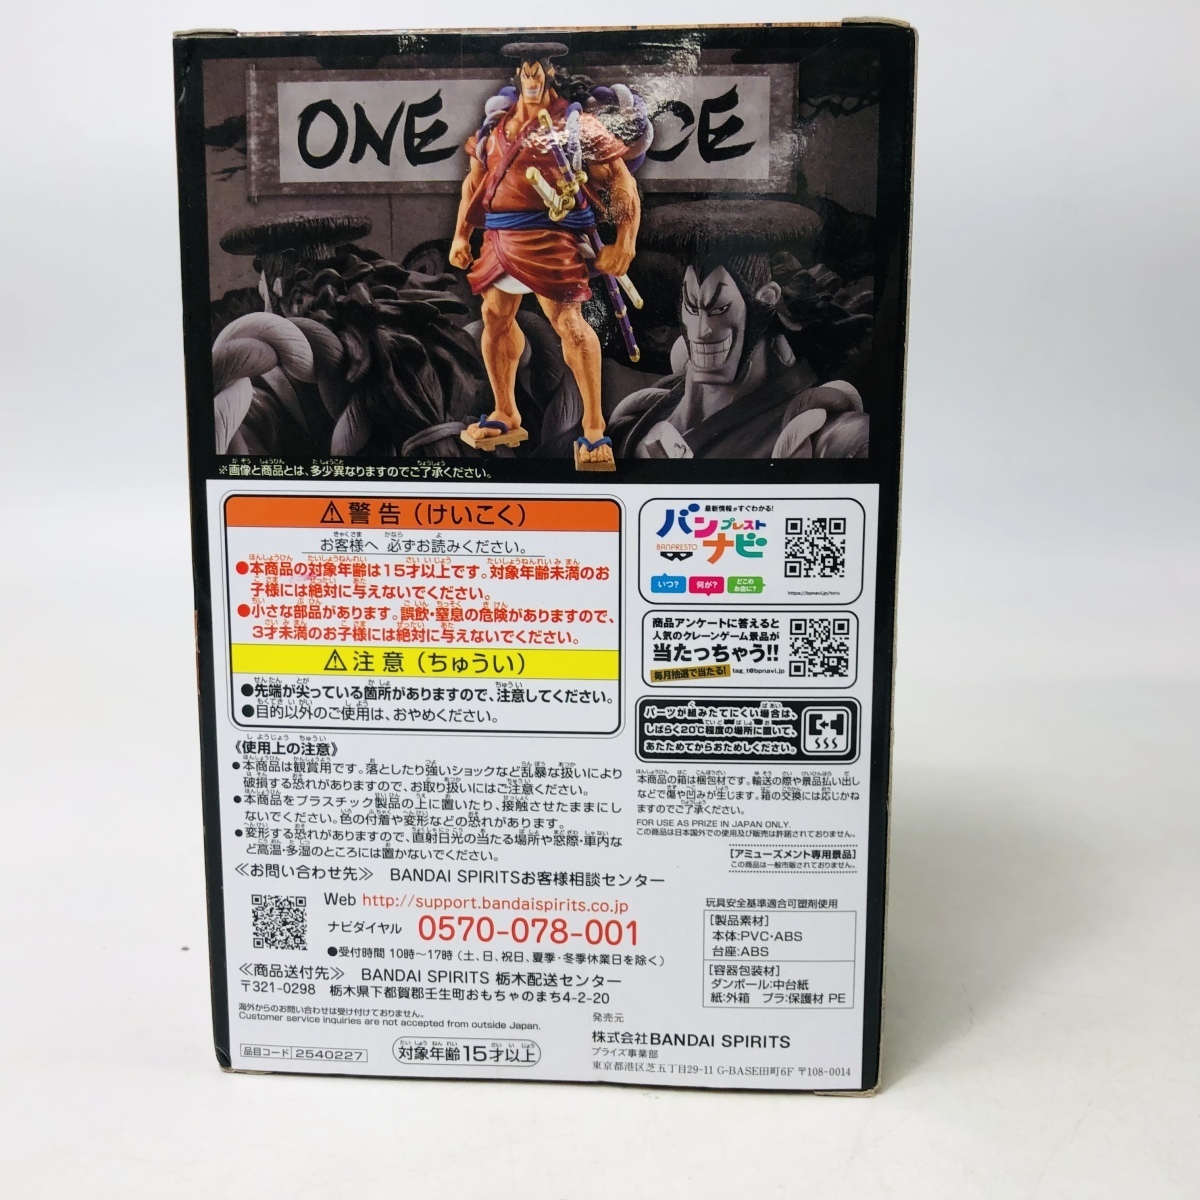 Dxf The Grandline Men ワノ国 Vol 10 ワンピース 光月お ん One Piece 売買されたオークション情報 Yahooの商品情報をアーカイブ公開 オークファン Aucfan Com